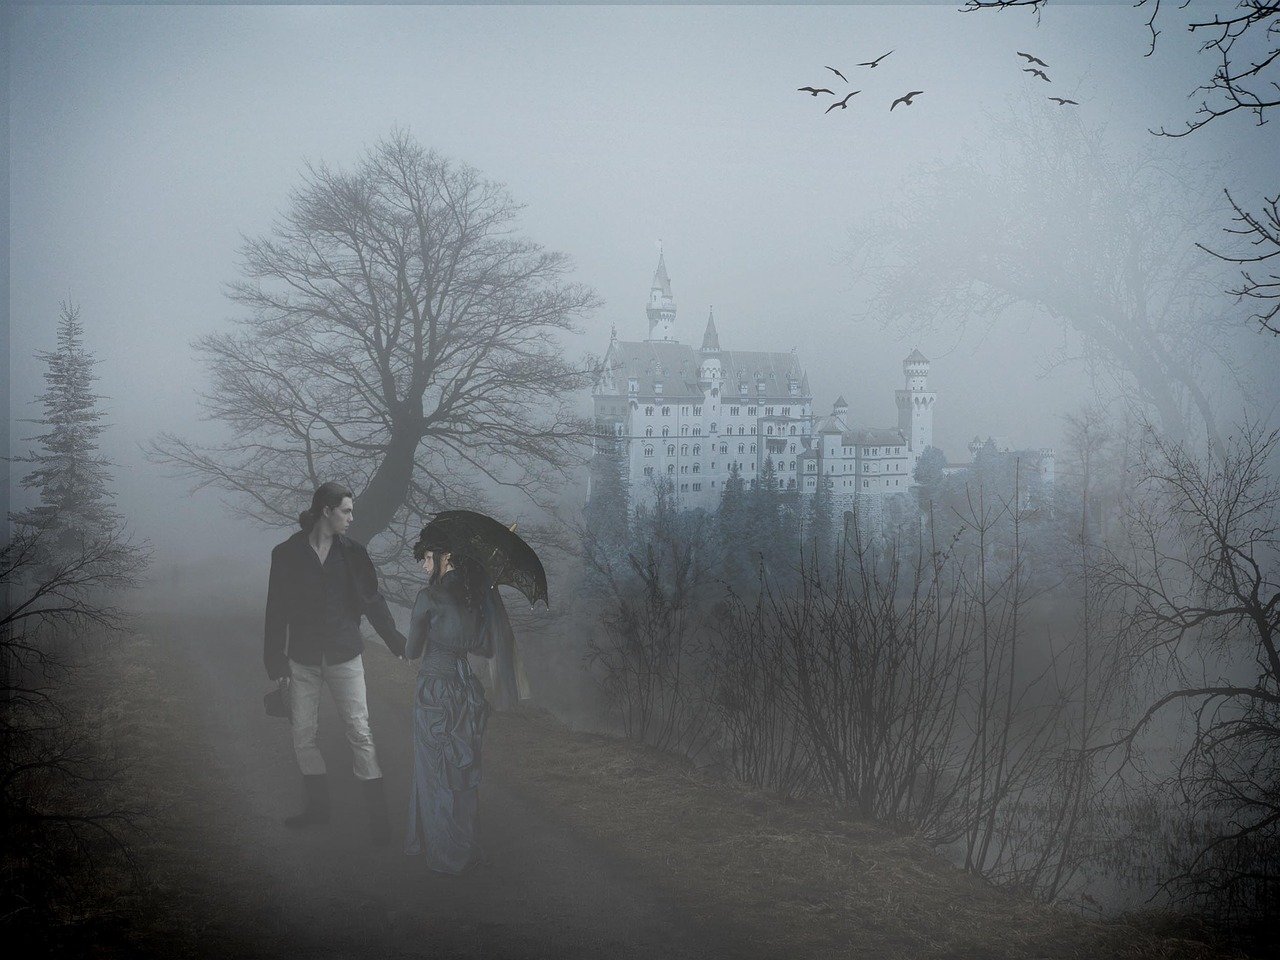 Будете видеть в тумане. Человек в тумане. Любовь в тумане. Женщина в тумане. Невеста в тумане.